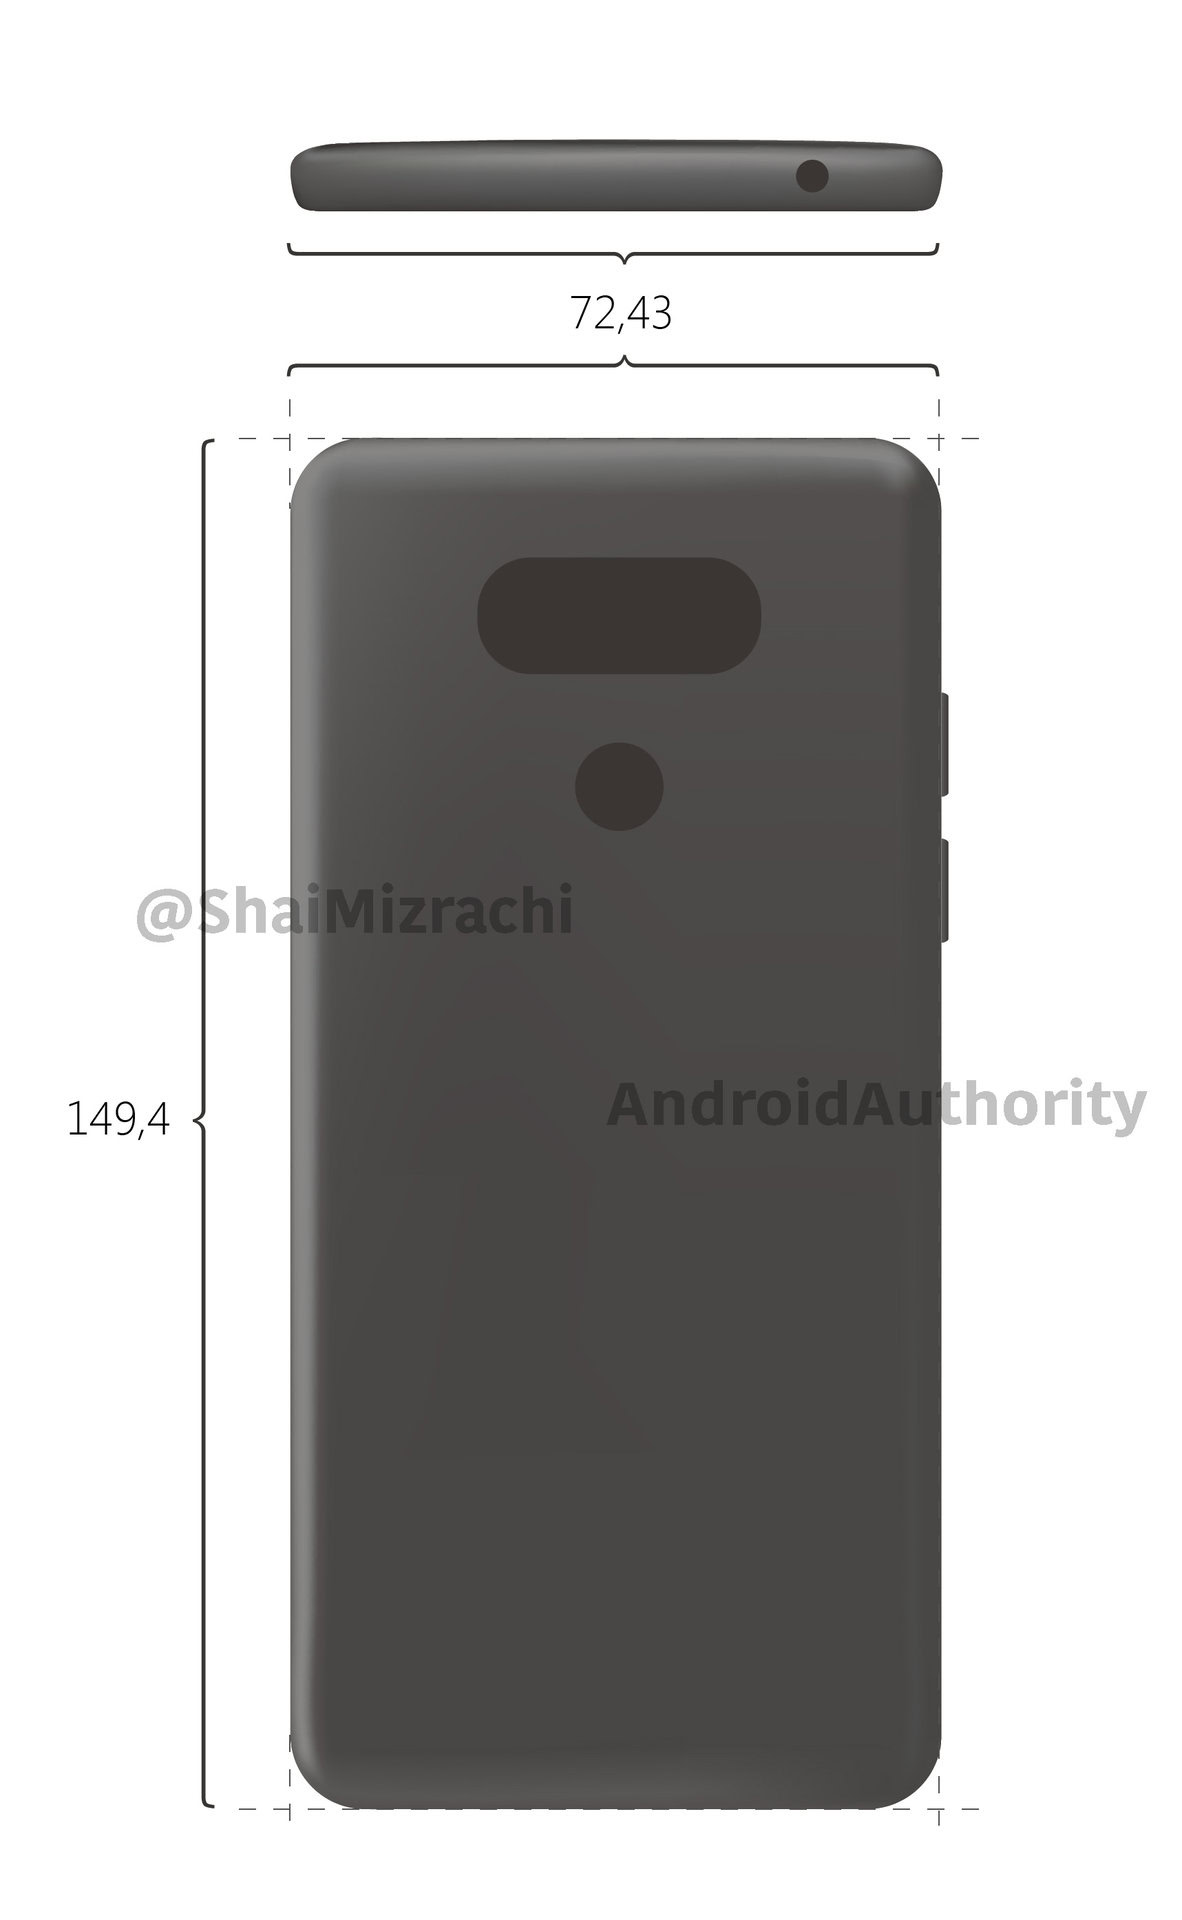 LG G6 leak shai mizrachi android authority